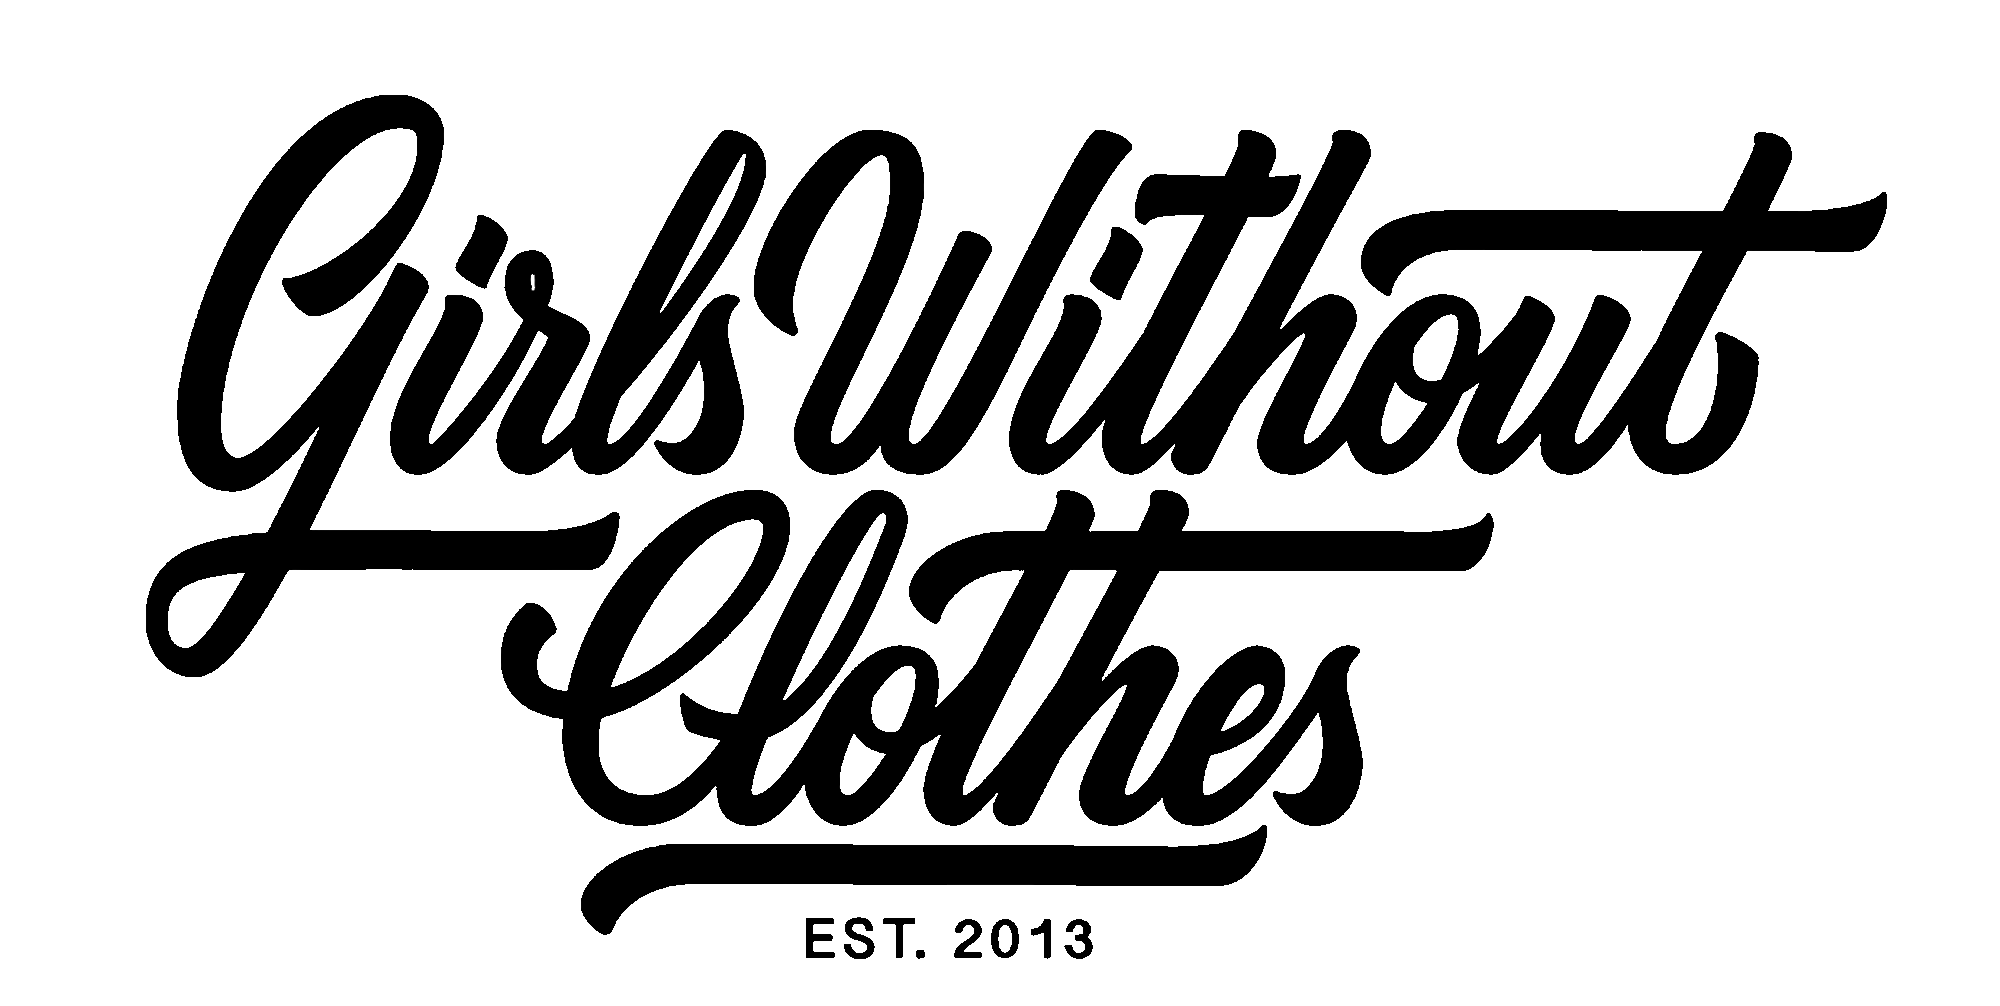 Skladon klient: Girls Without Clothes